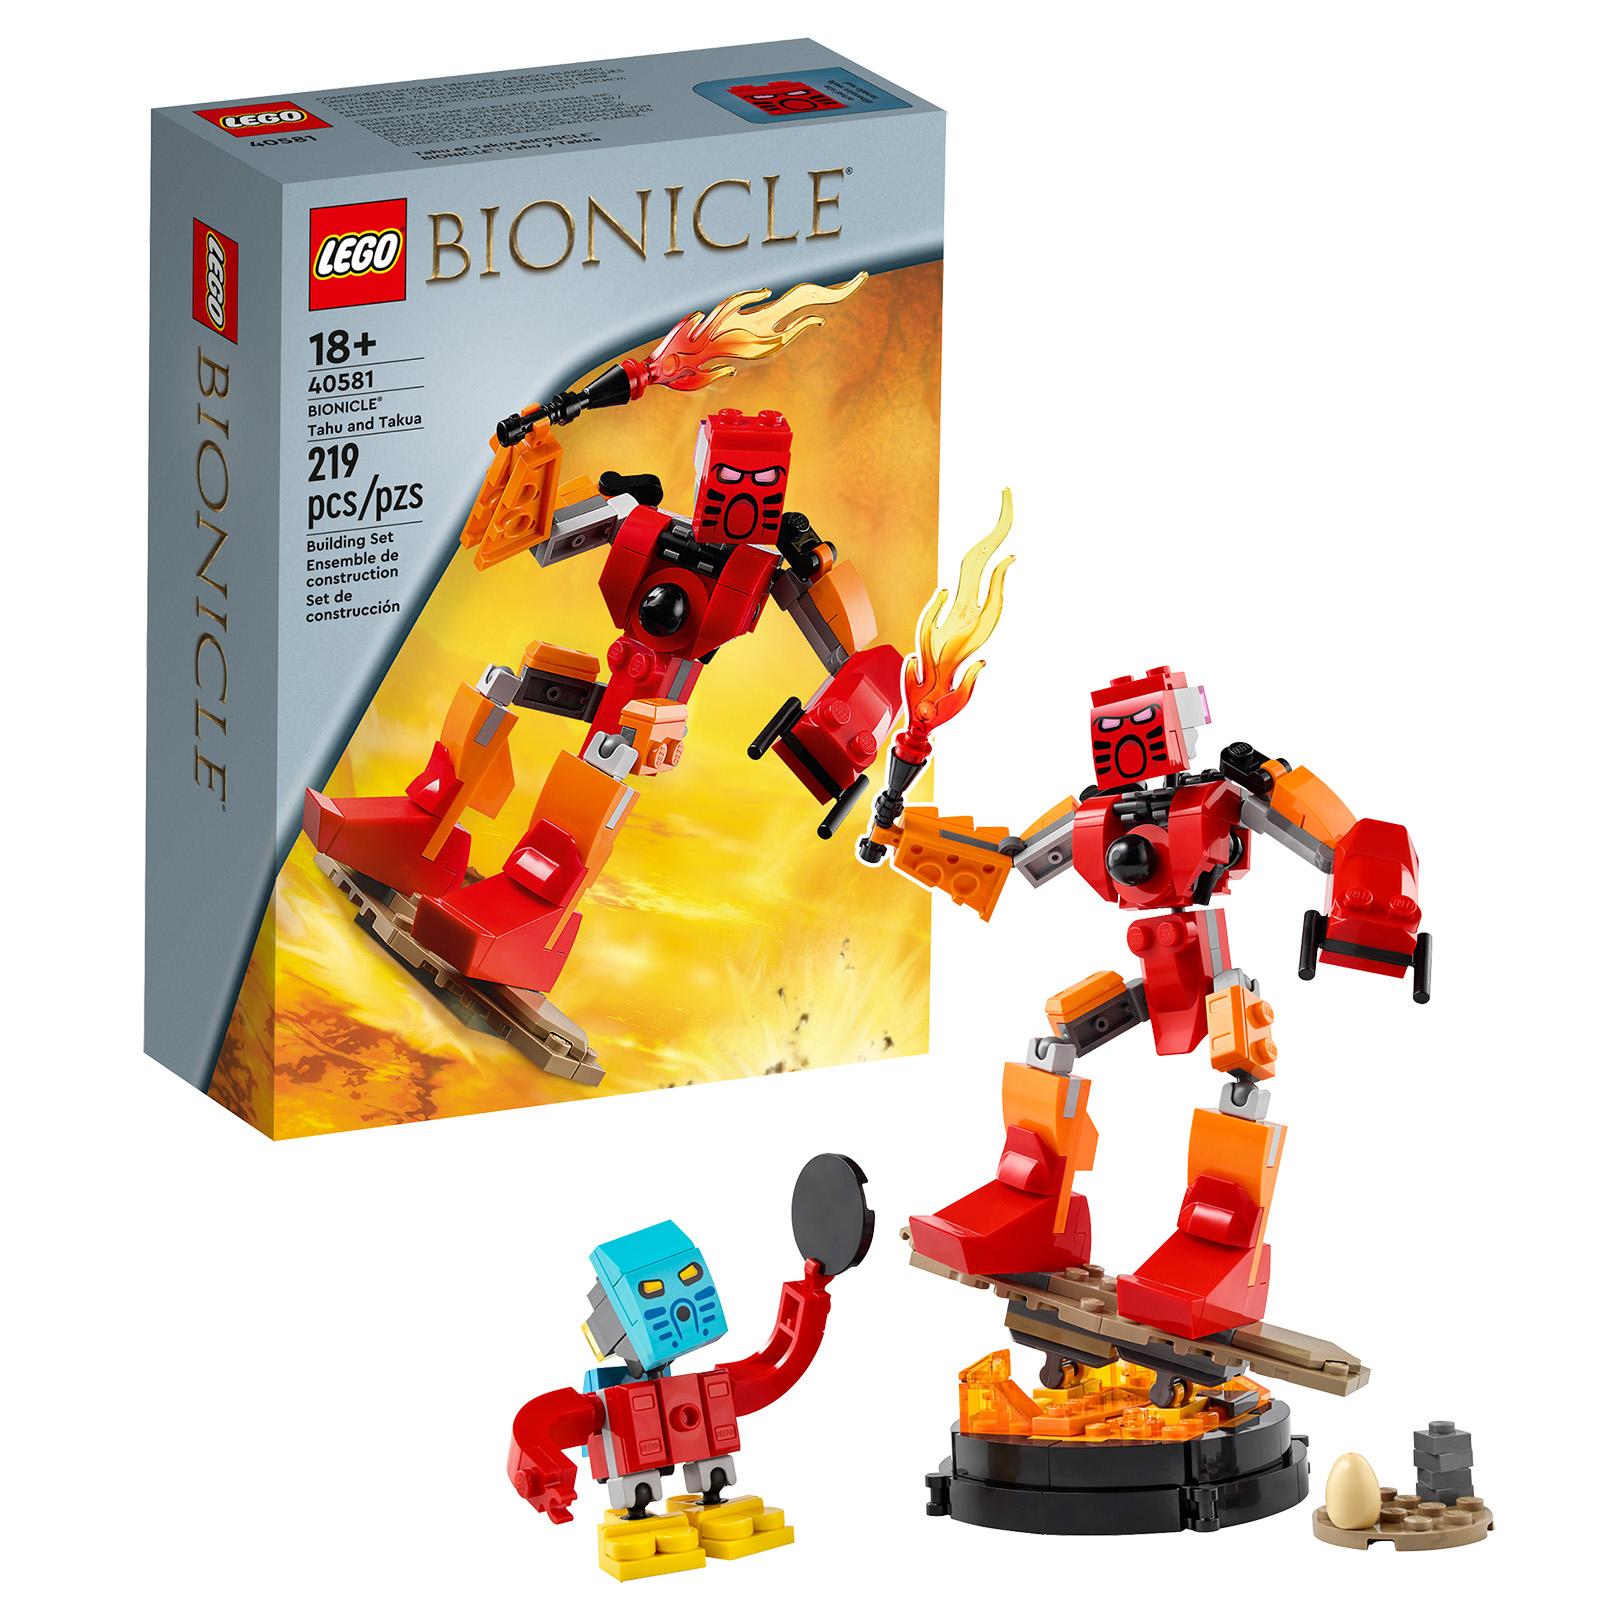 LEGO 40581 BIONICLE ტაჰუ და ტაკუა: სარეკლამო ნაკრები არის ონლაინ მაღაზიაში